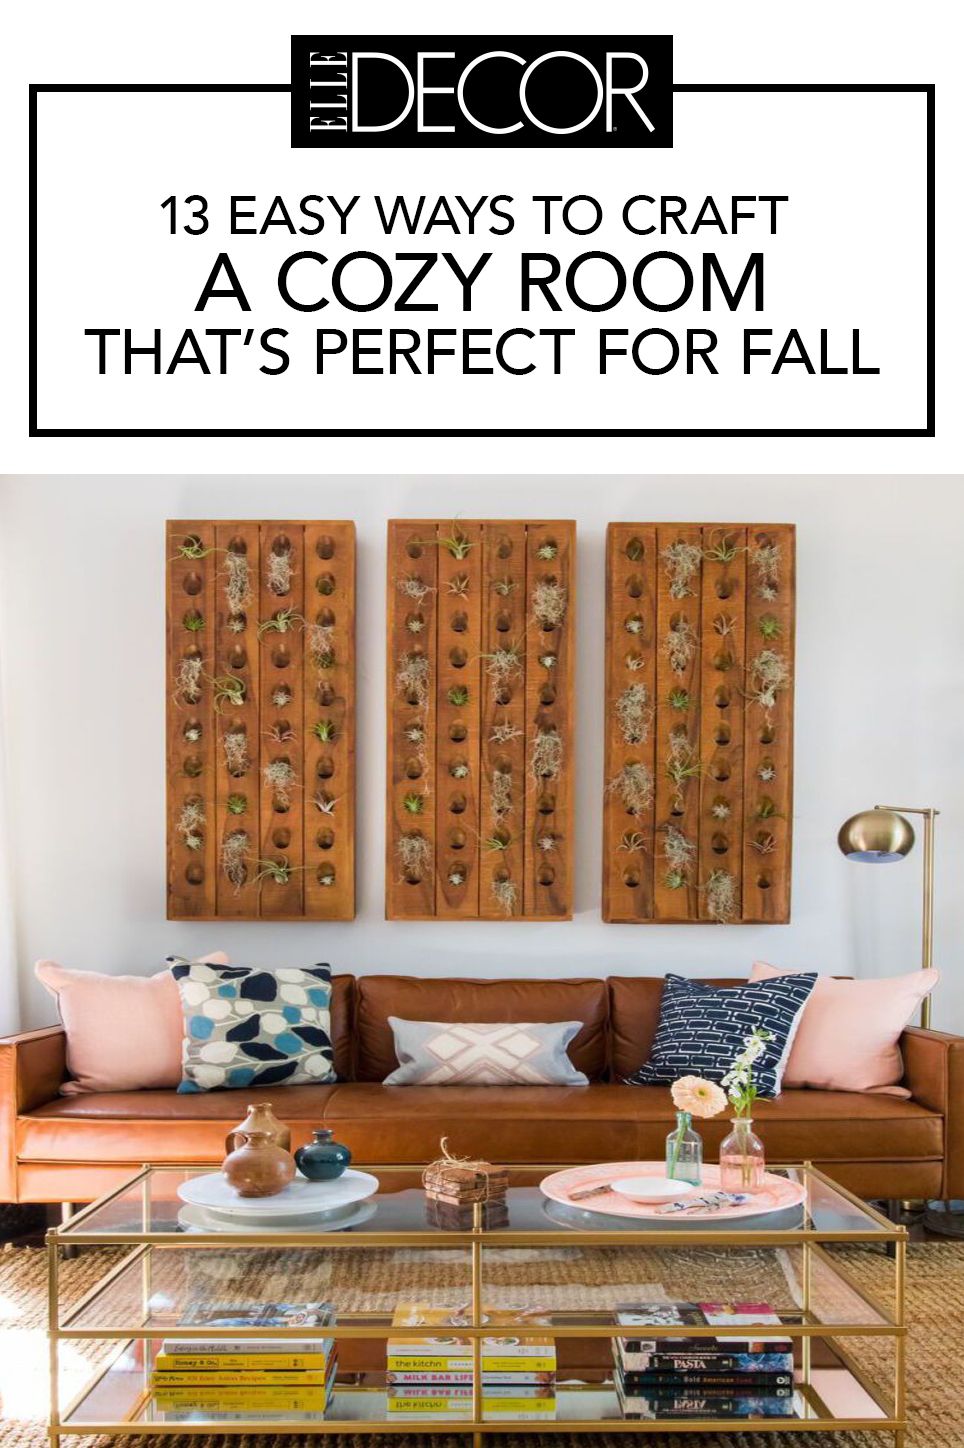 14 Cozy Living Room & Bedroom Ideas - How to Design a Warm Room